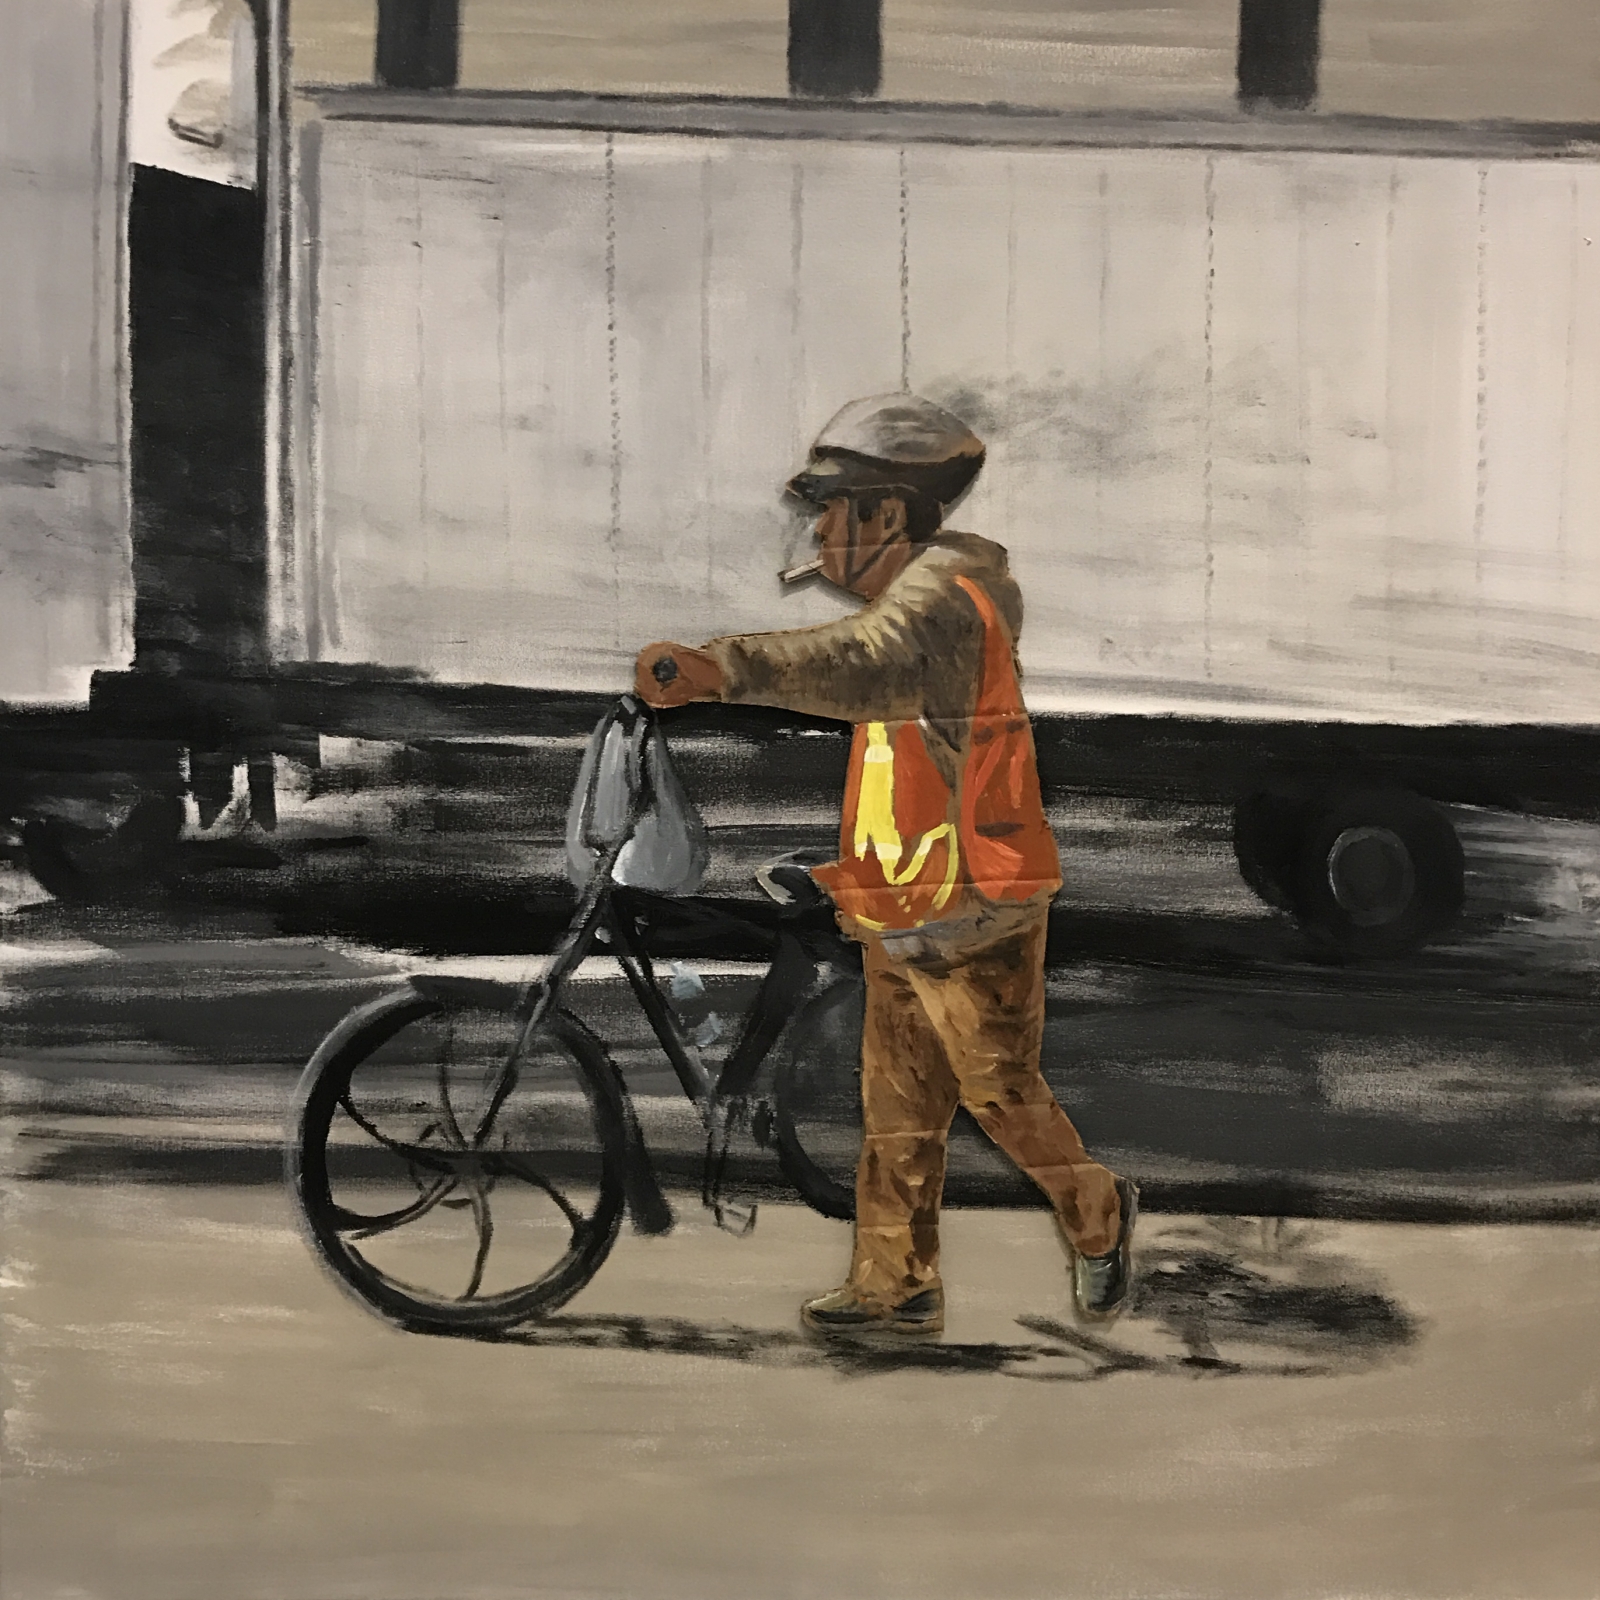 Ramiro Gomez
77 7th Ave, 2018
acrylic and cardboard on canvas
48 x 48 in.
121.9 x 121.9 cm